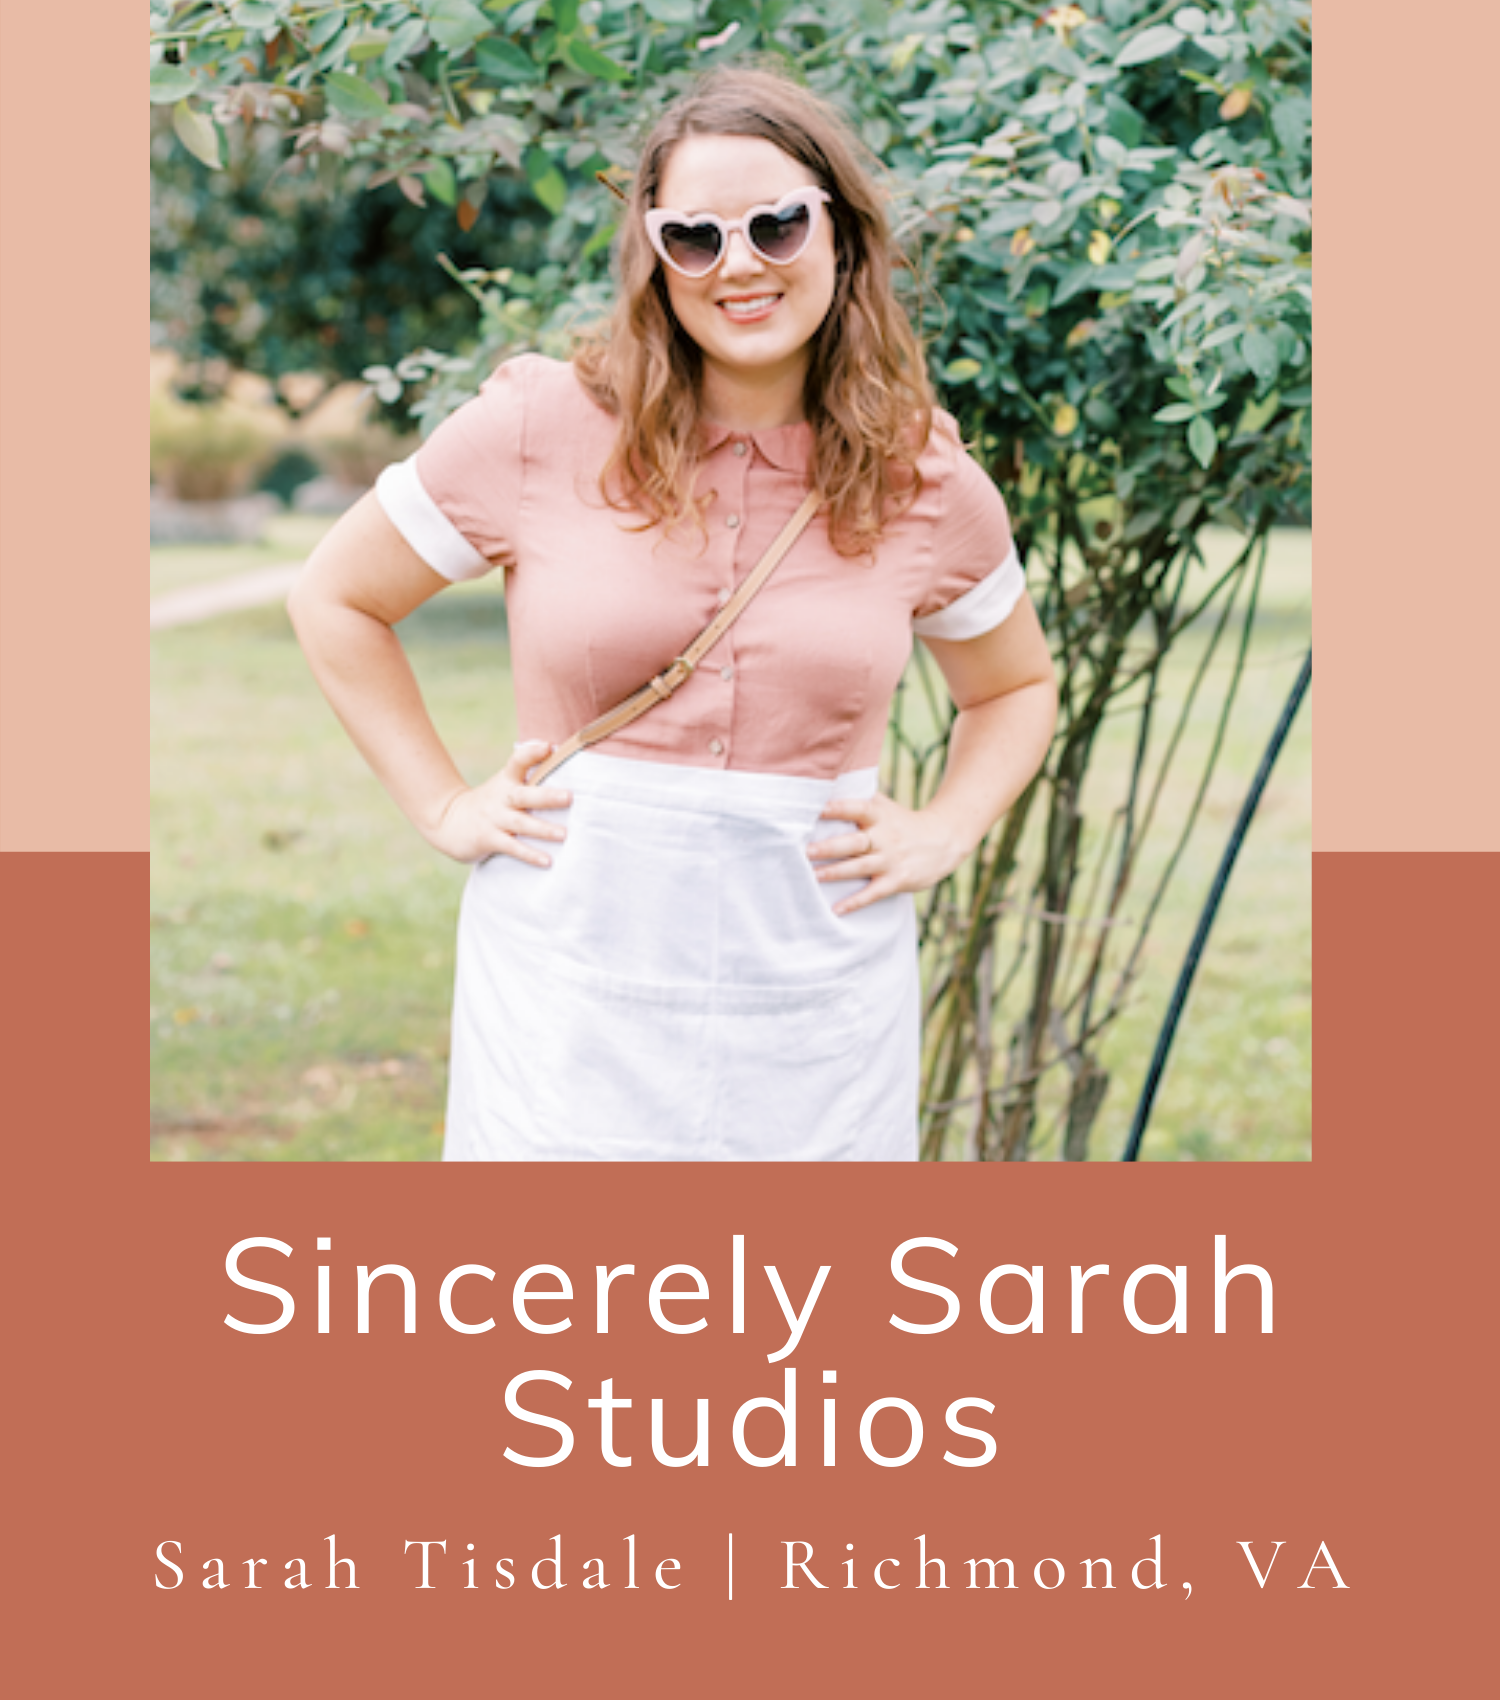 SINCERELY SARAH STUDIOS